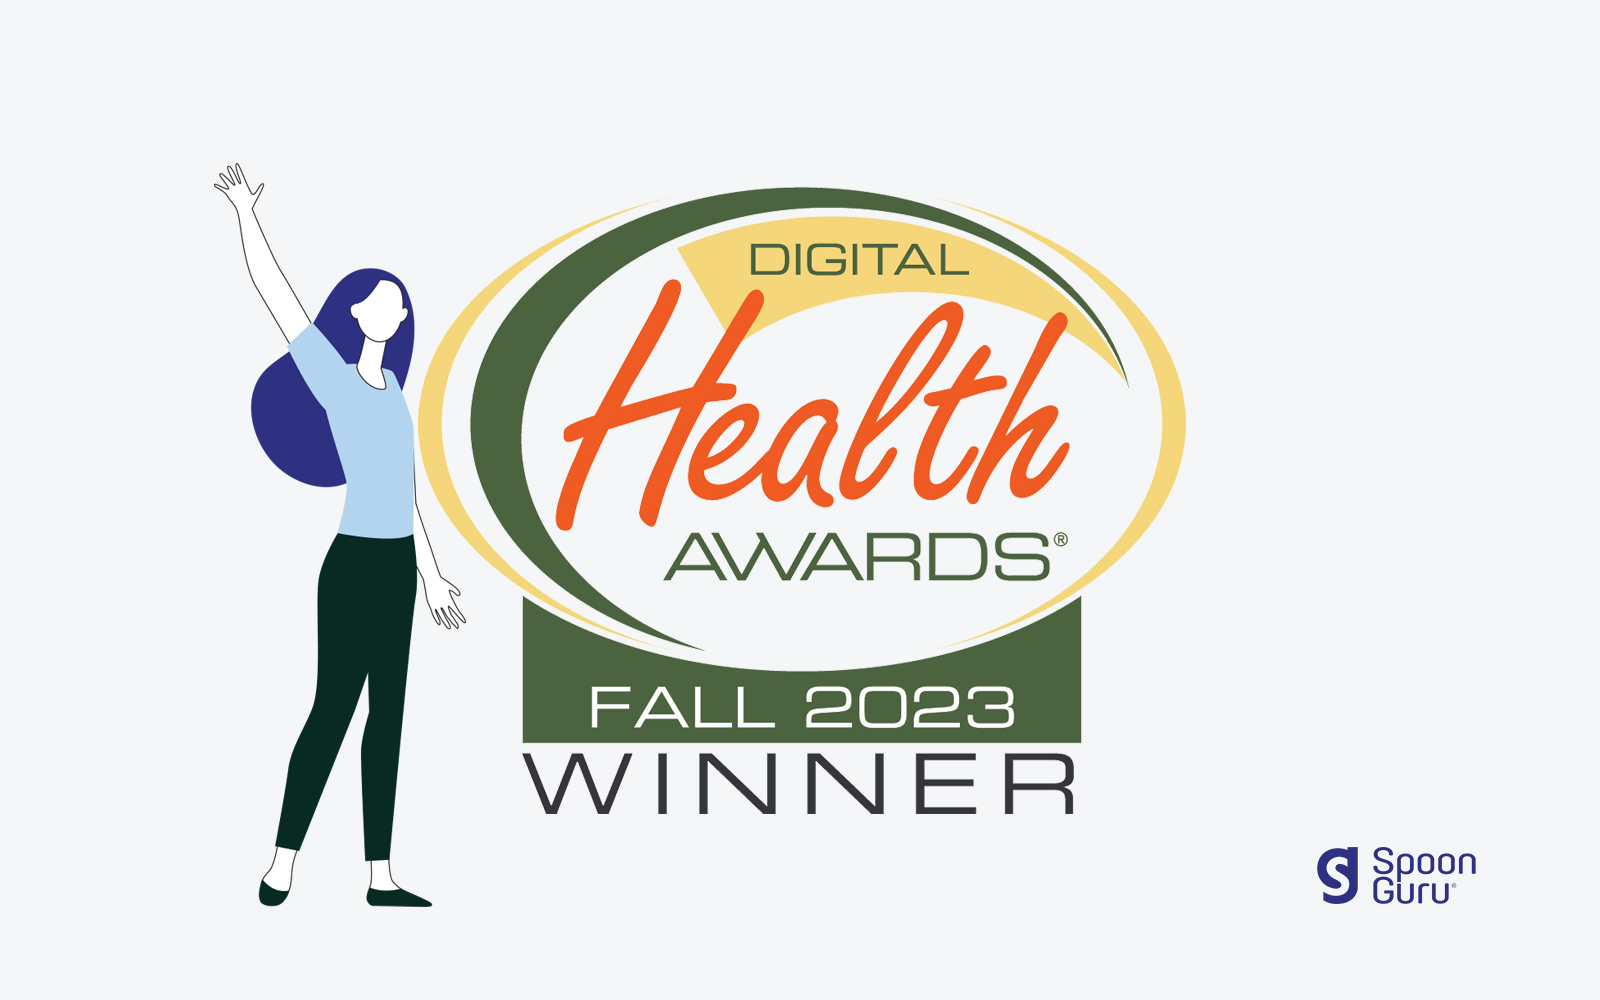 Spoon Guru receives Digital Health Award, Fall 2023